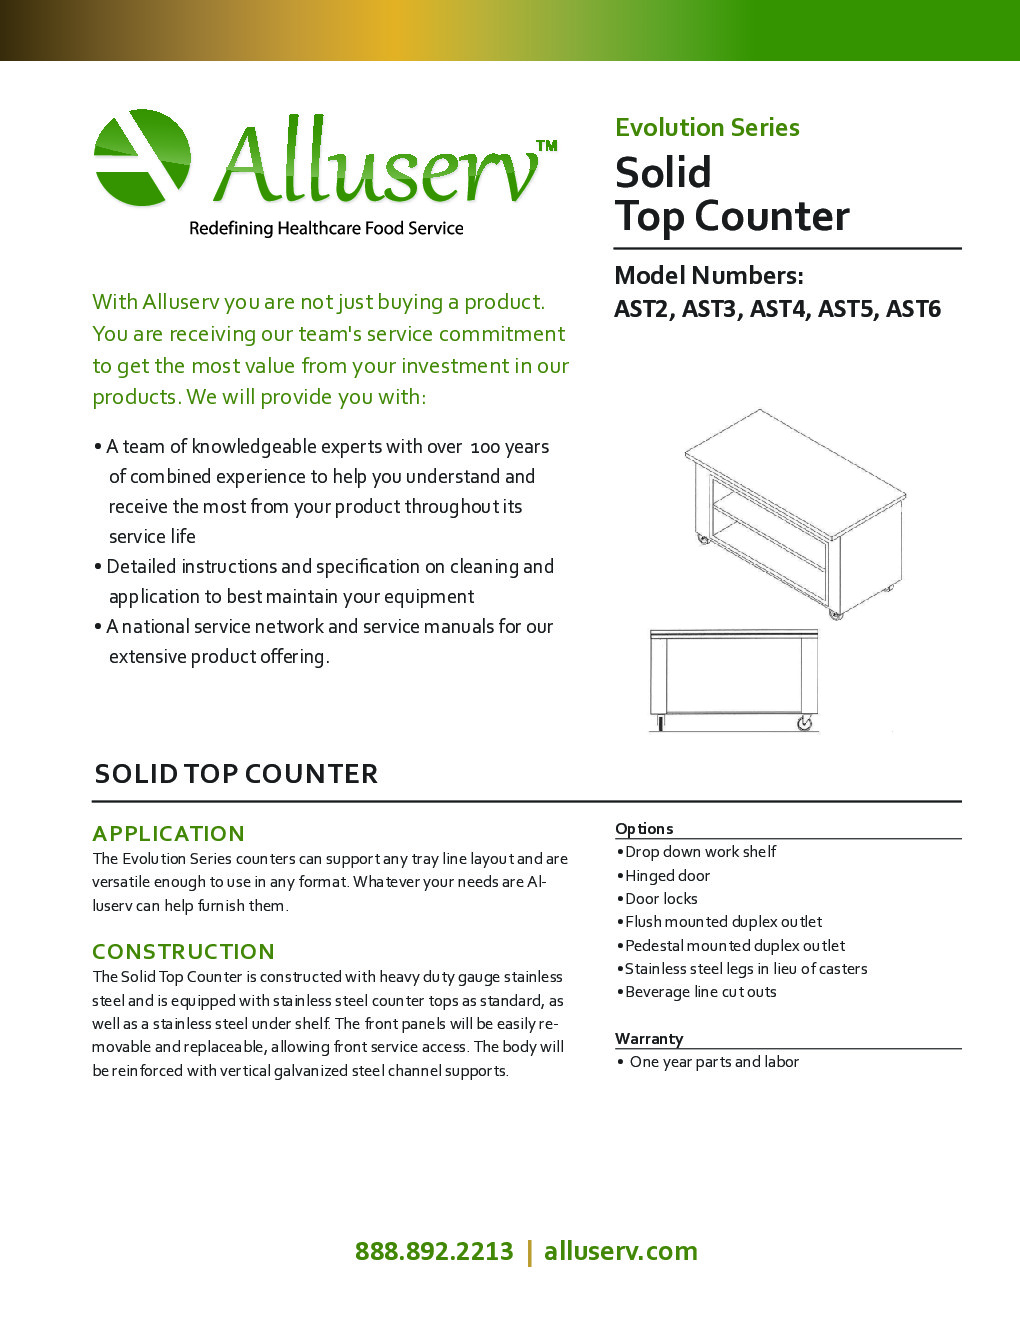 Alluserv AST3 Utility Serving Counter